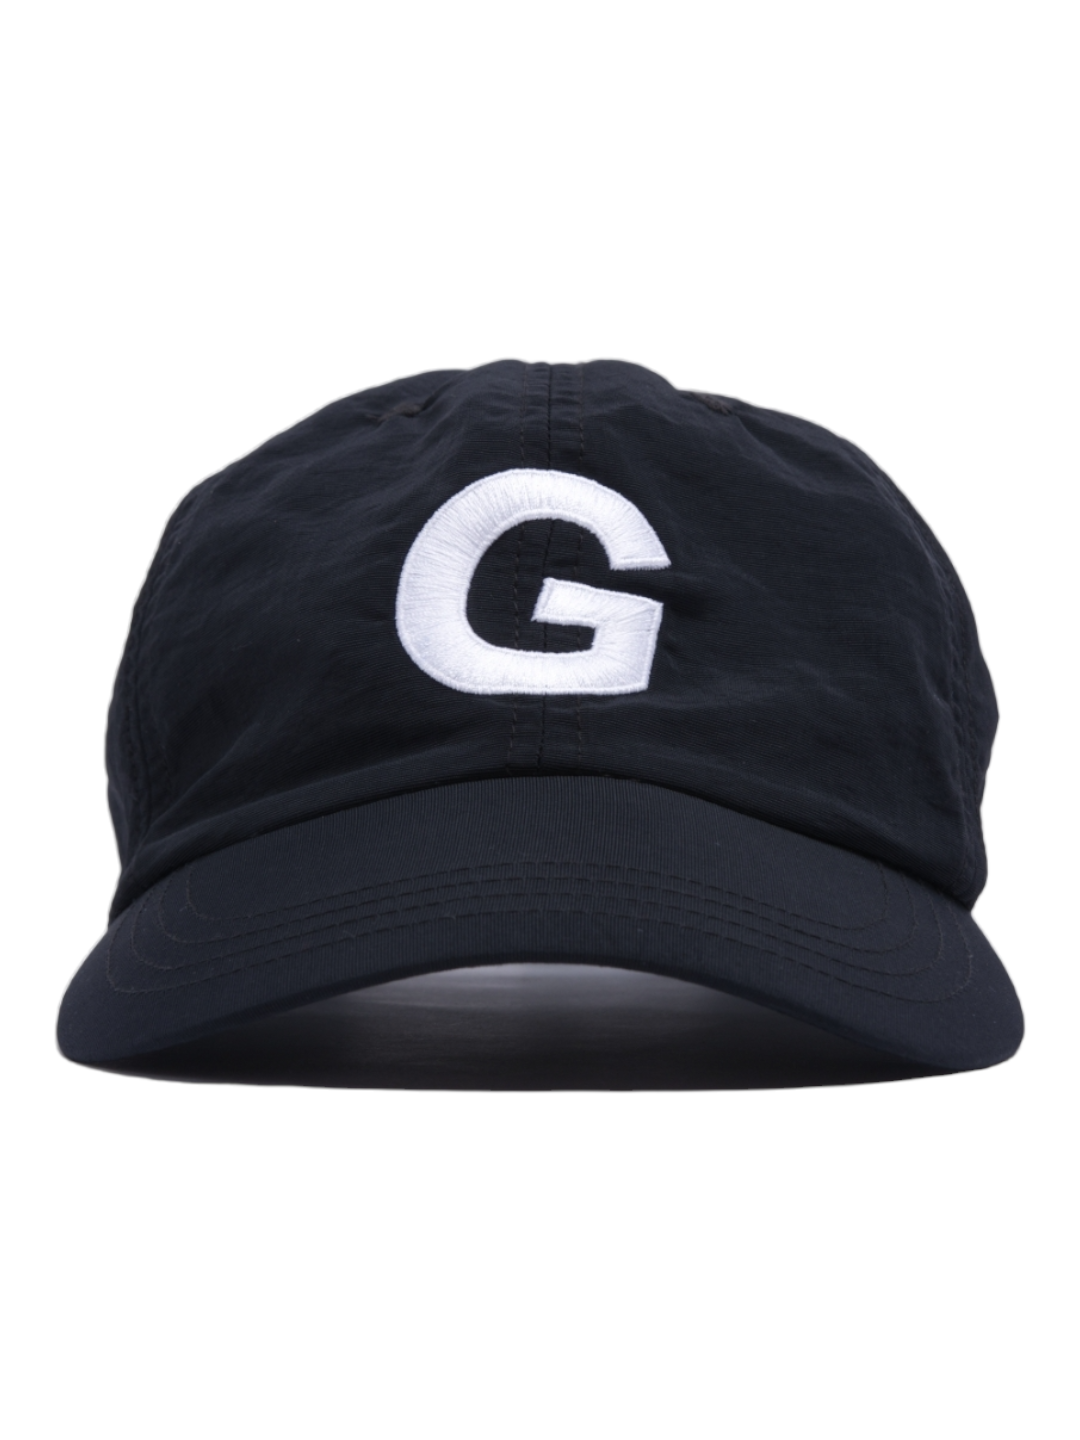 Original Getricheasy Cap (Black)